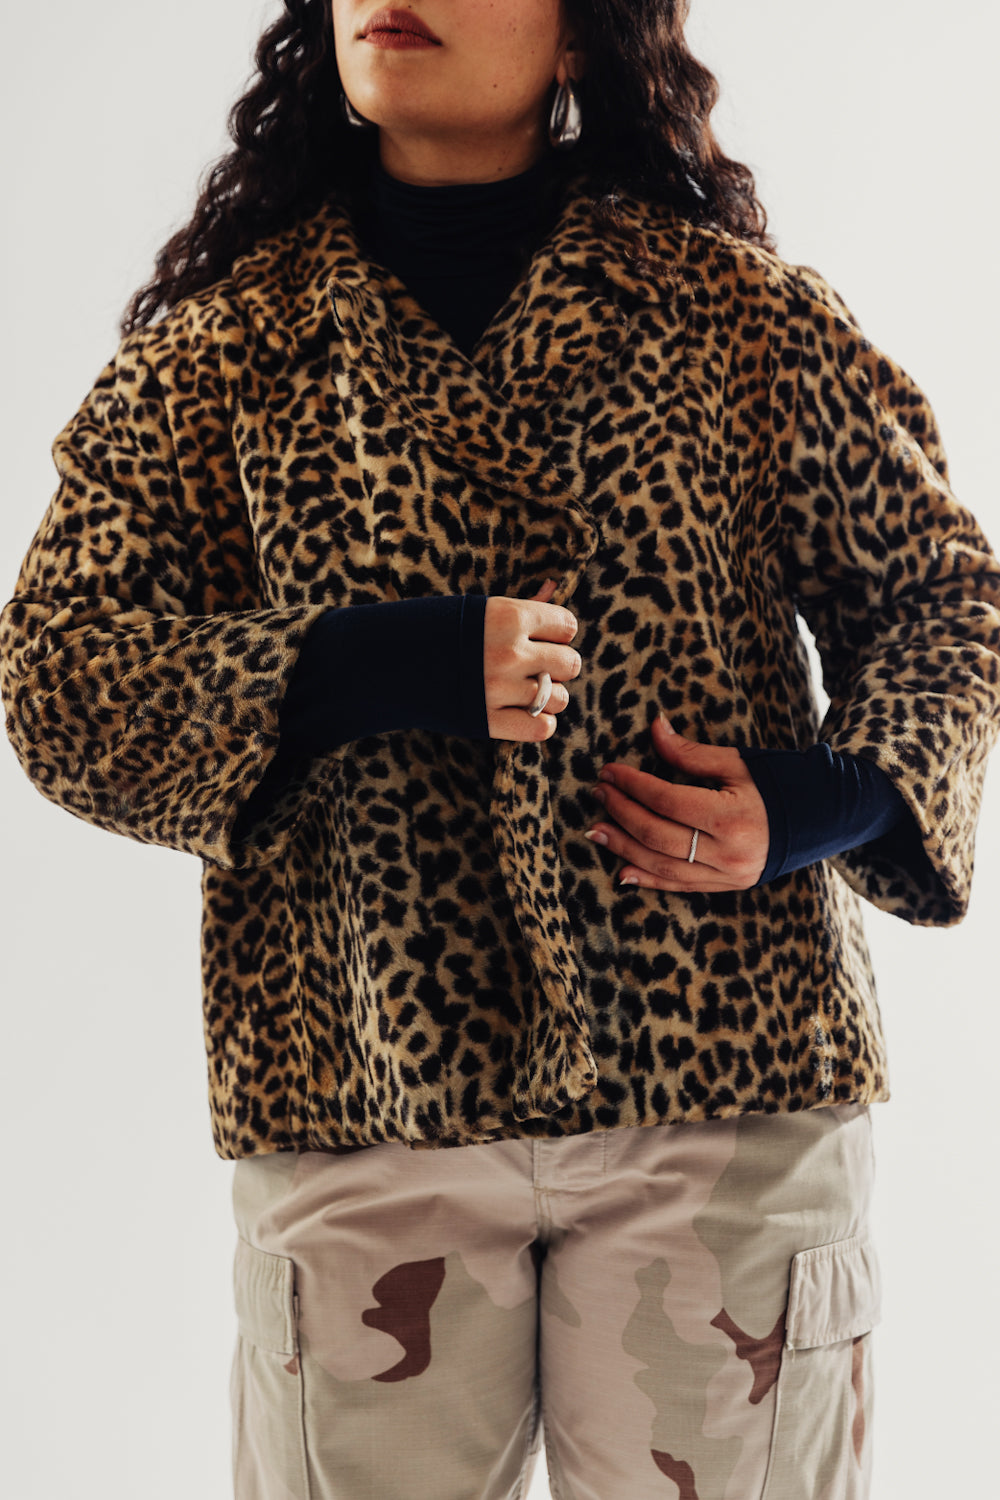 Leopard Vintage Fur Cropped Jacket / Size M-L